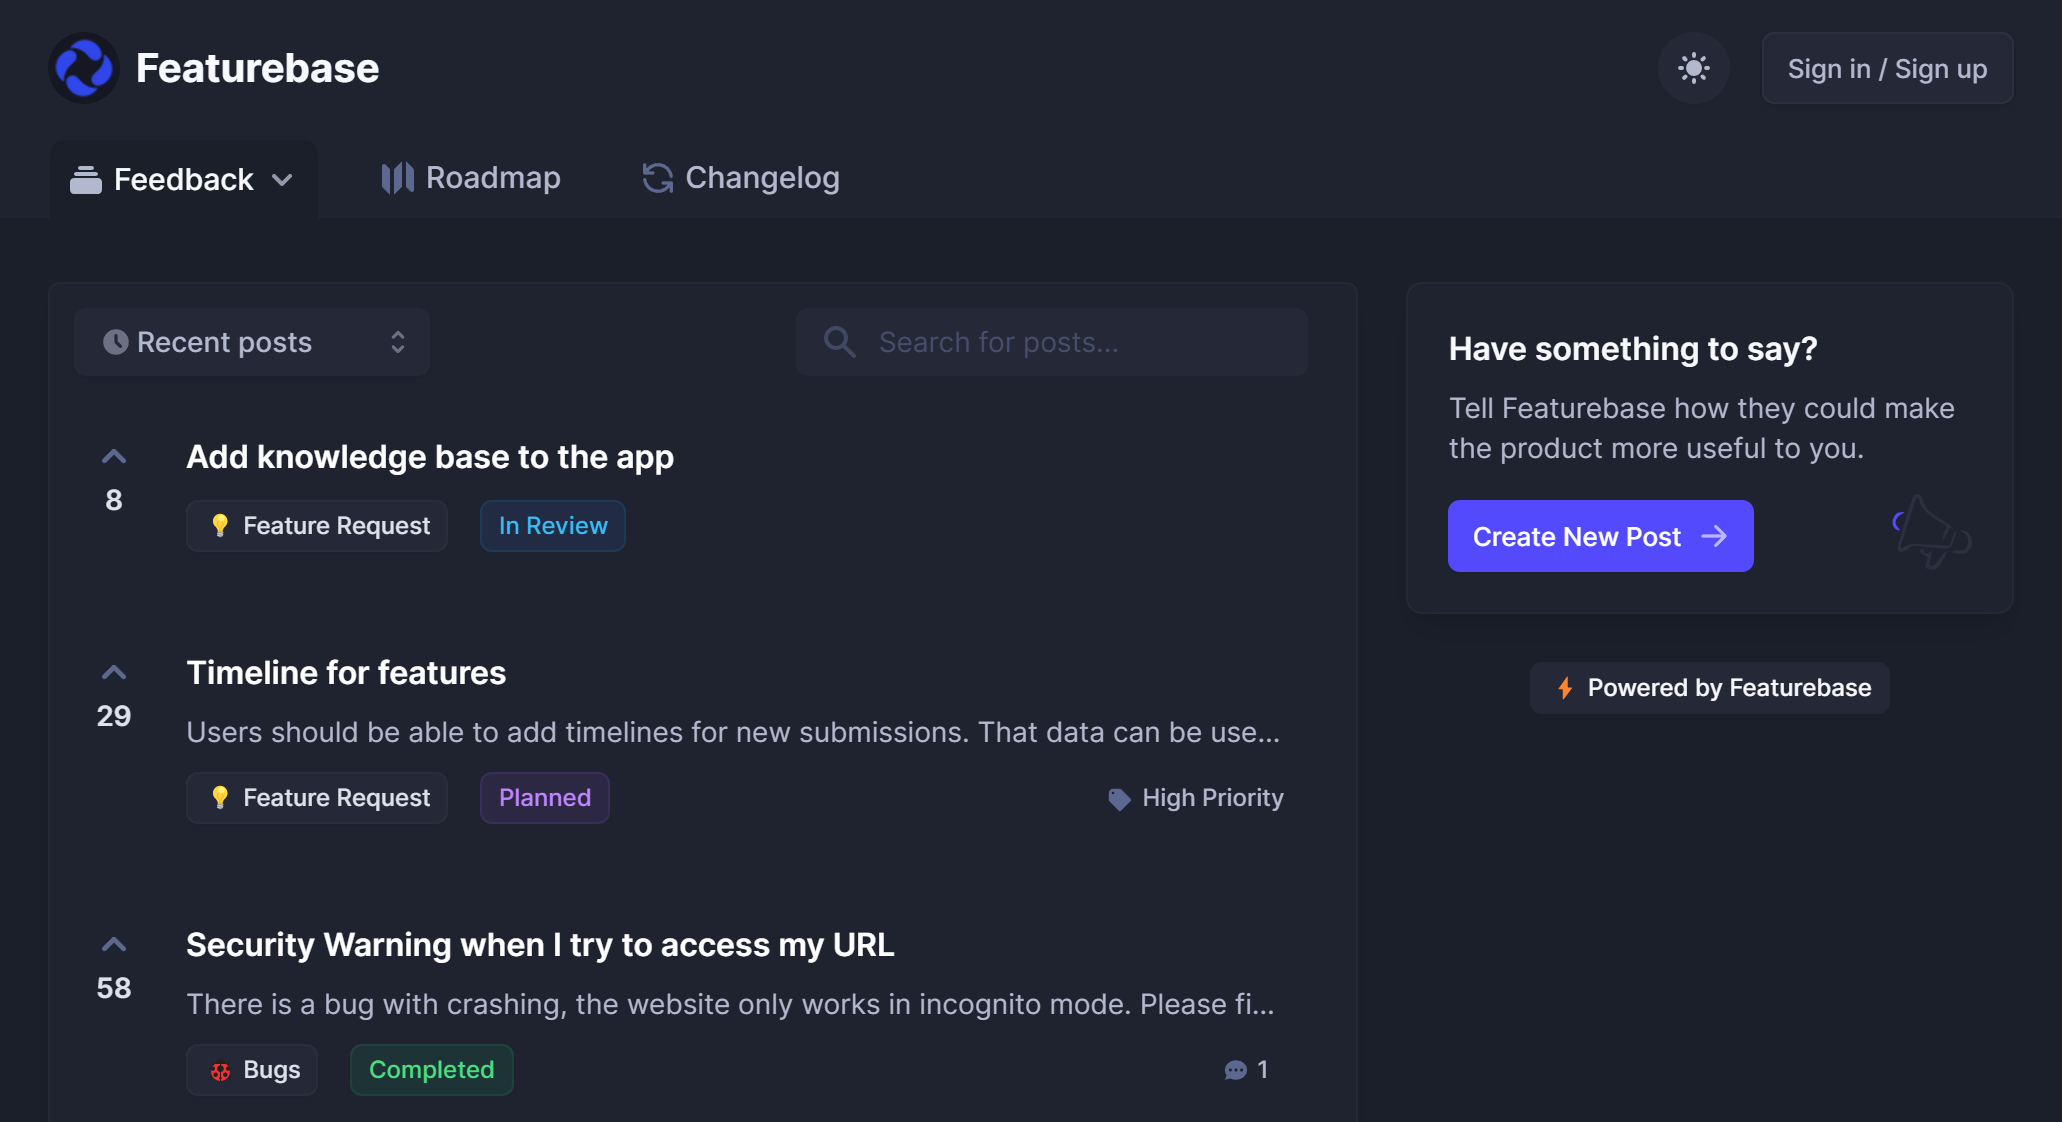 The Featurebase feedback portal showing already received user feedback.